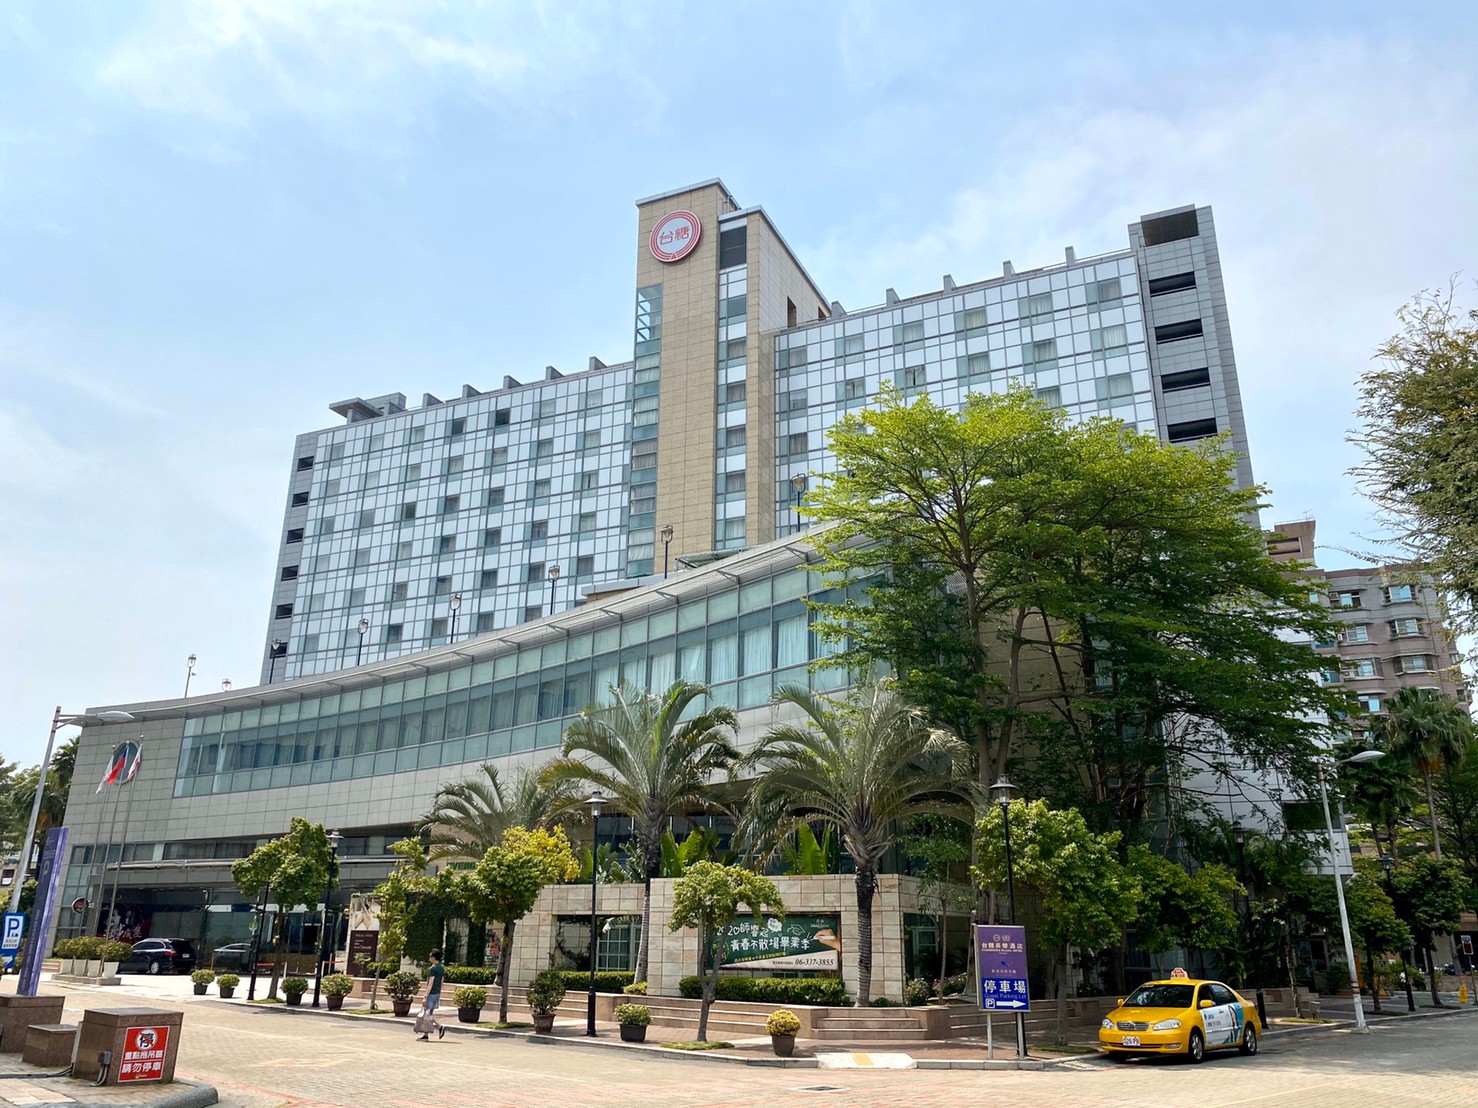 台糖長榮酒店 (台南),EVERGREEN PLAZA HOTEL (TAINAN)